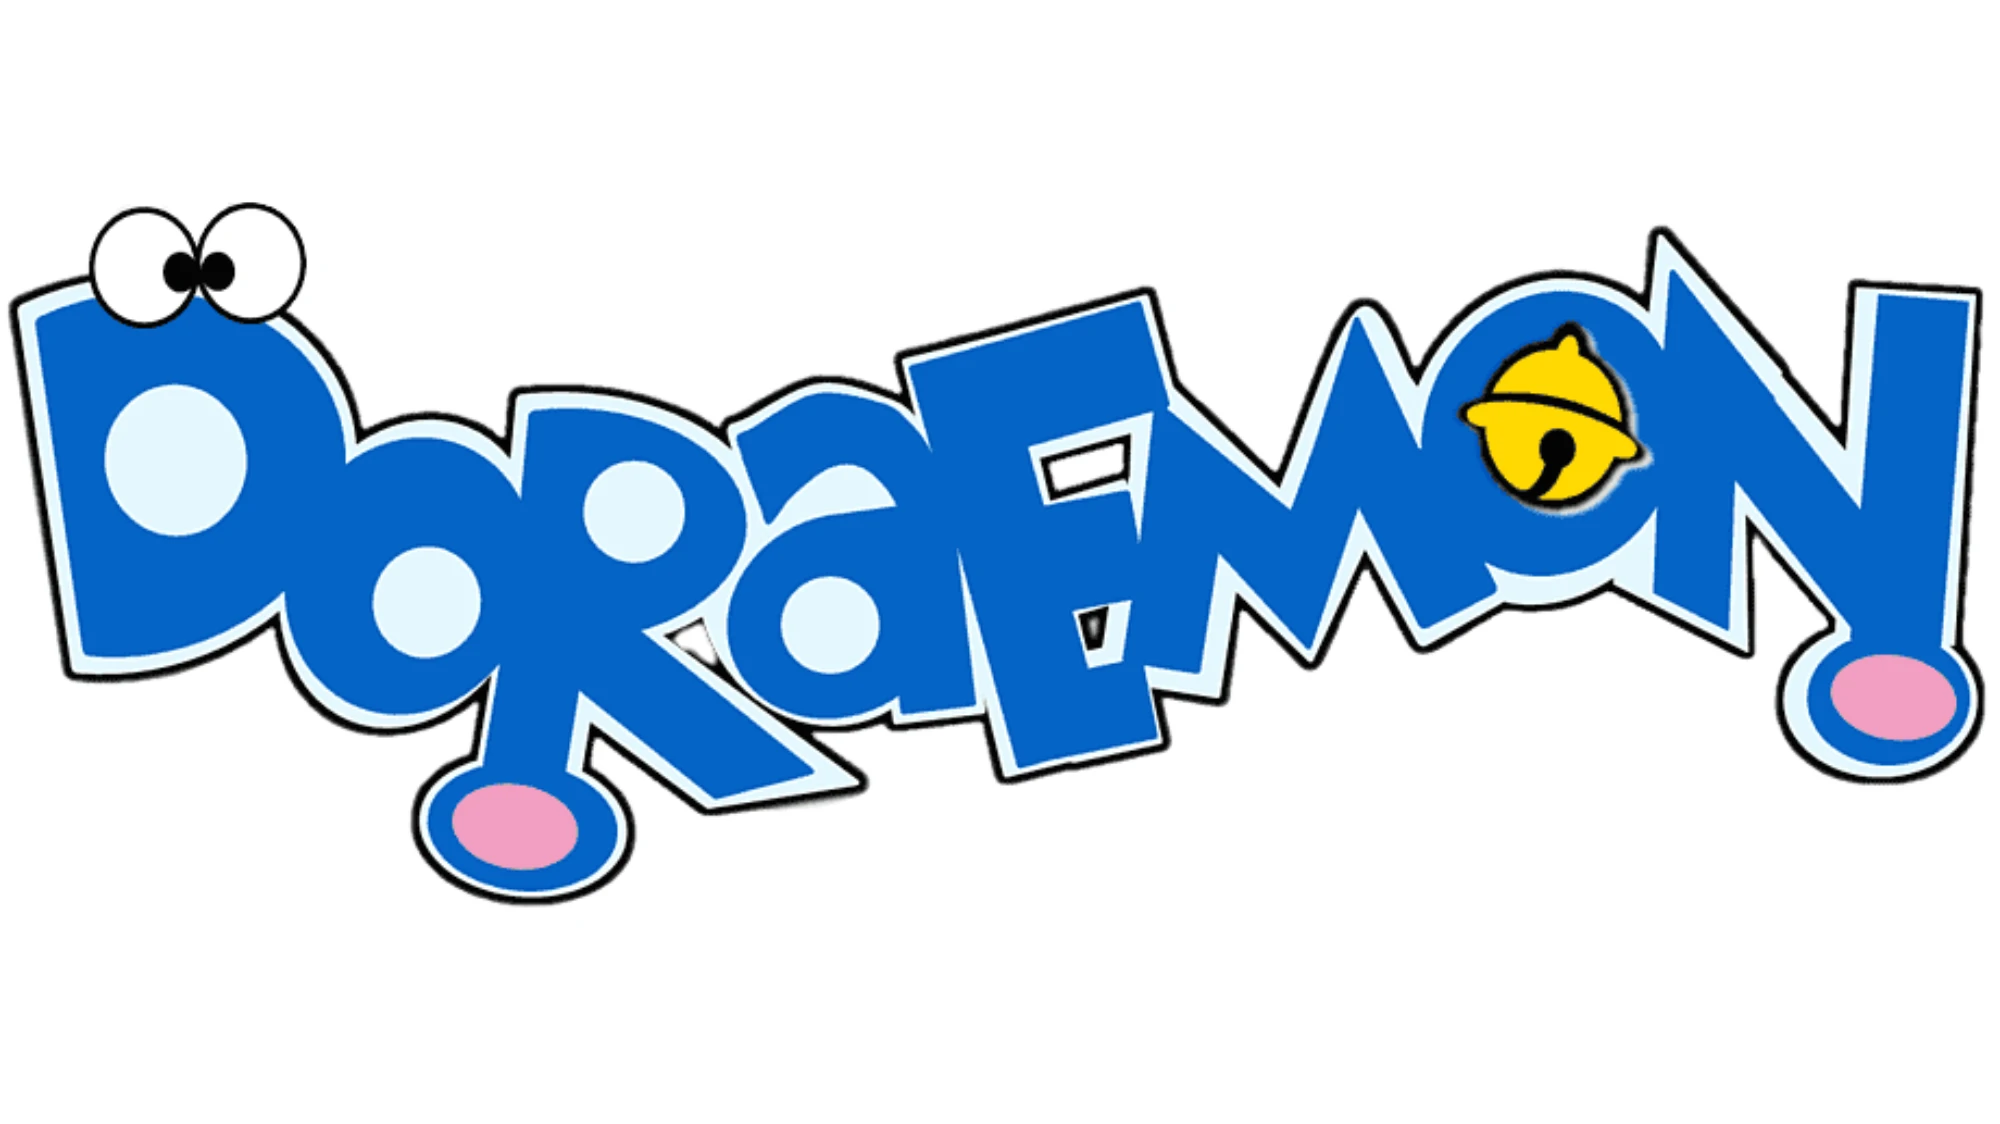 doraemon-logo